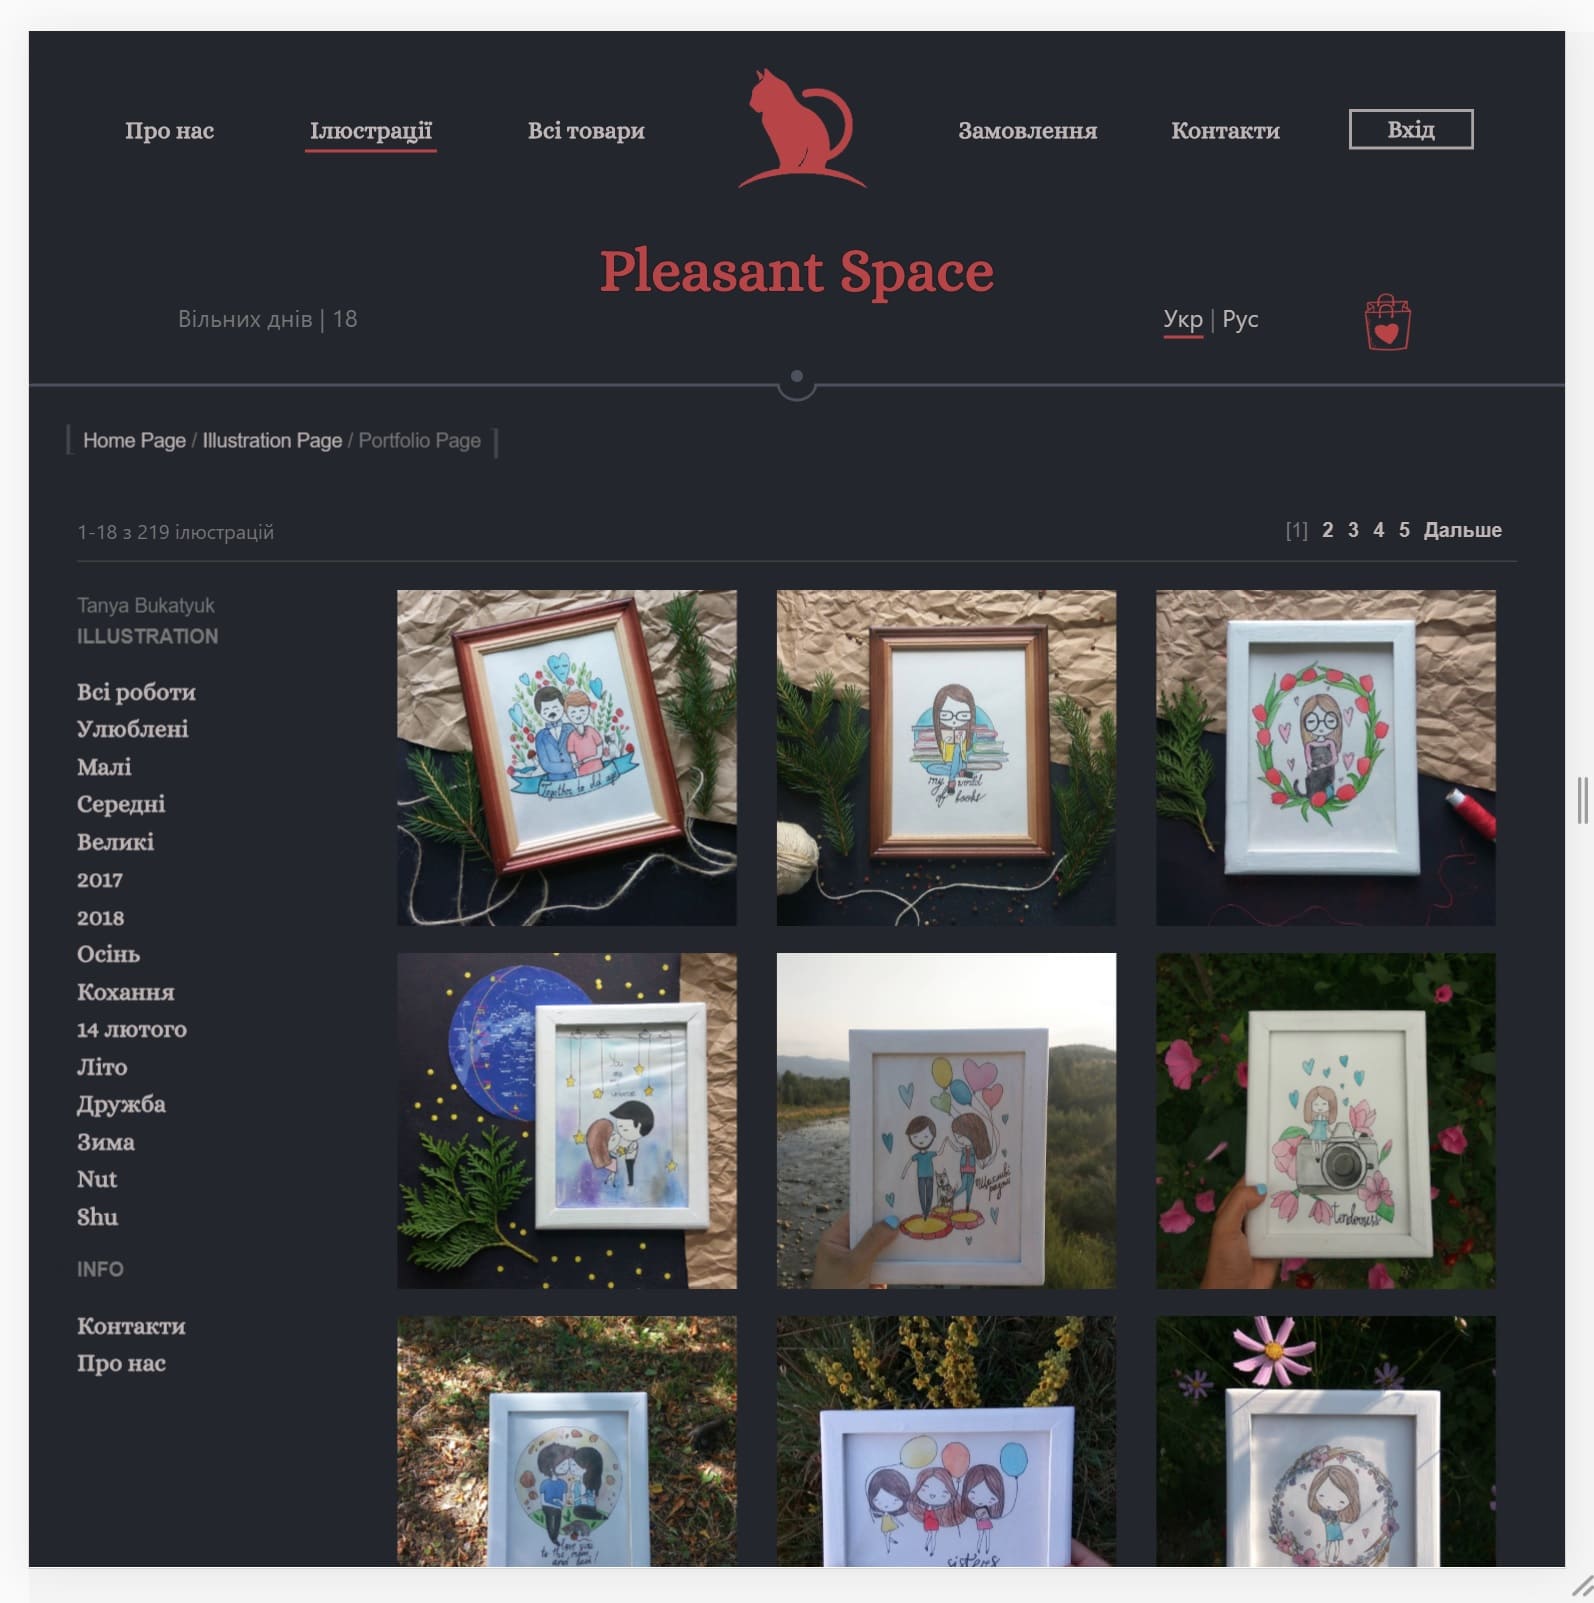 Pleasant Space website